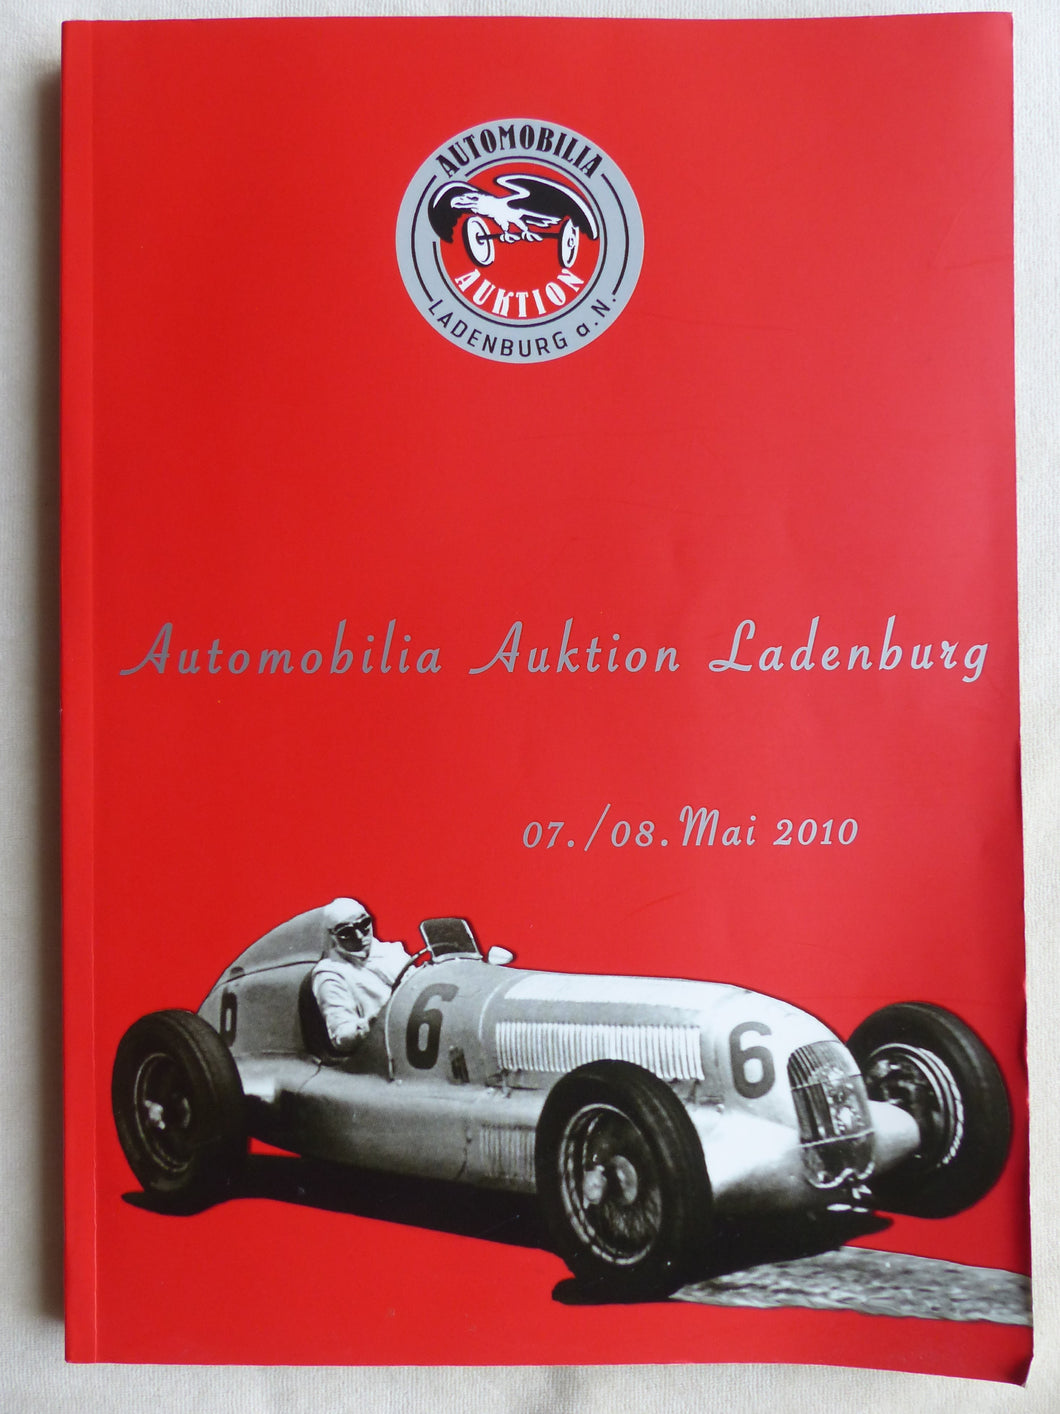 Automobilia Auktion Ladenburg 07.& 08. Mai 2010 - Auktionsverzeichnis Katalog